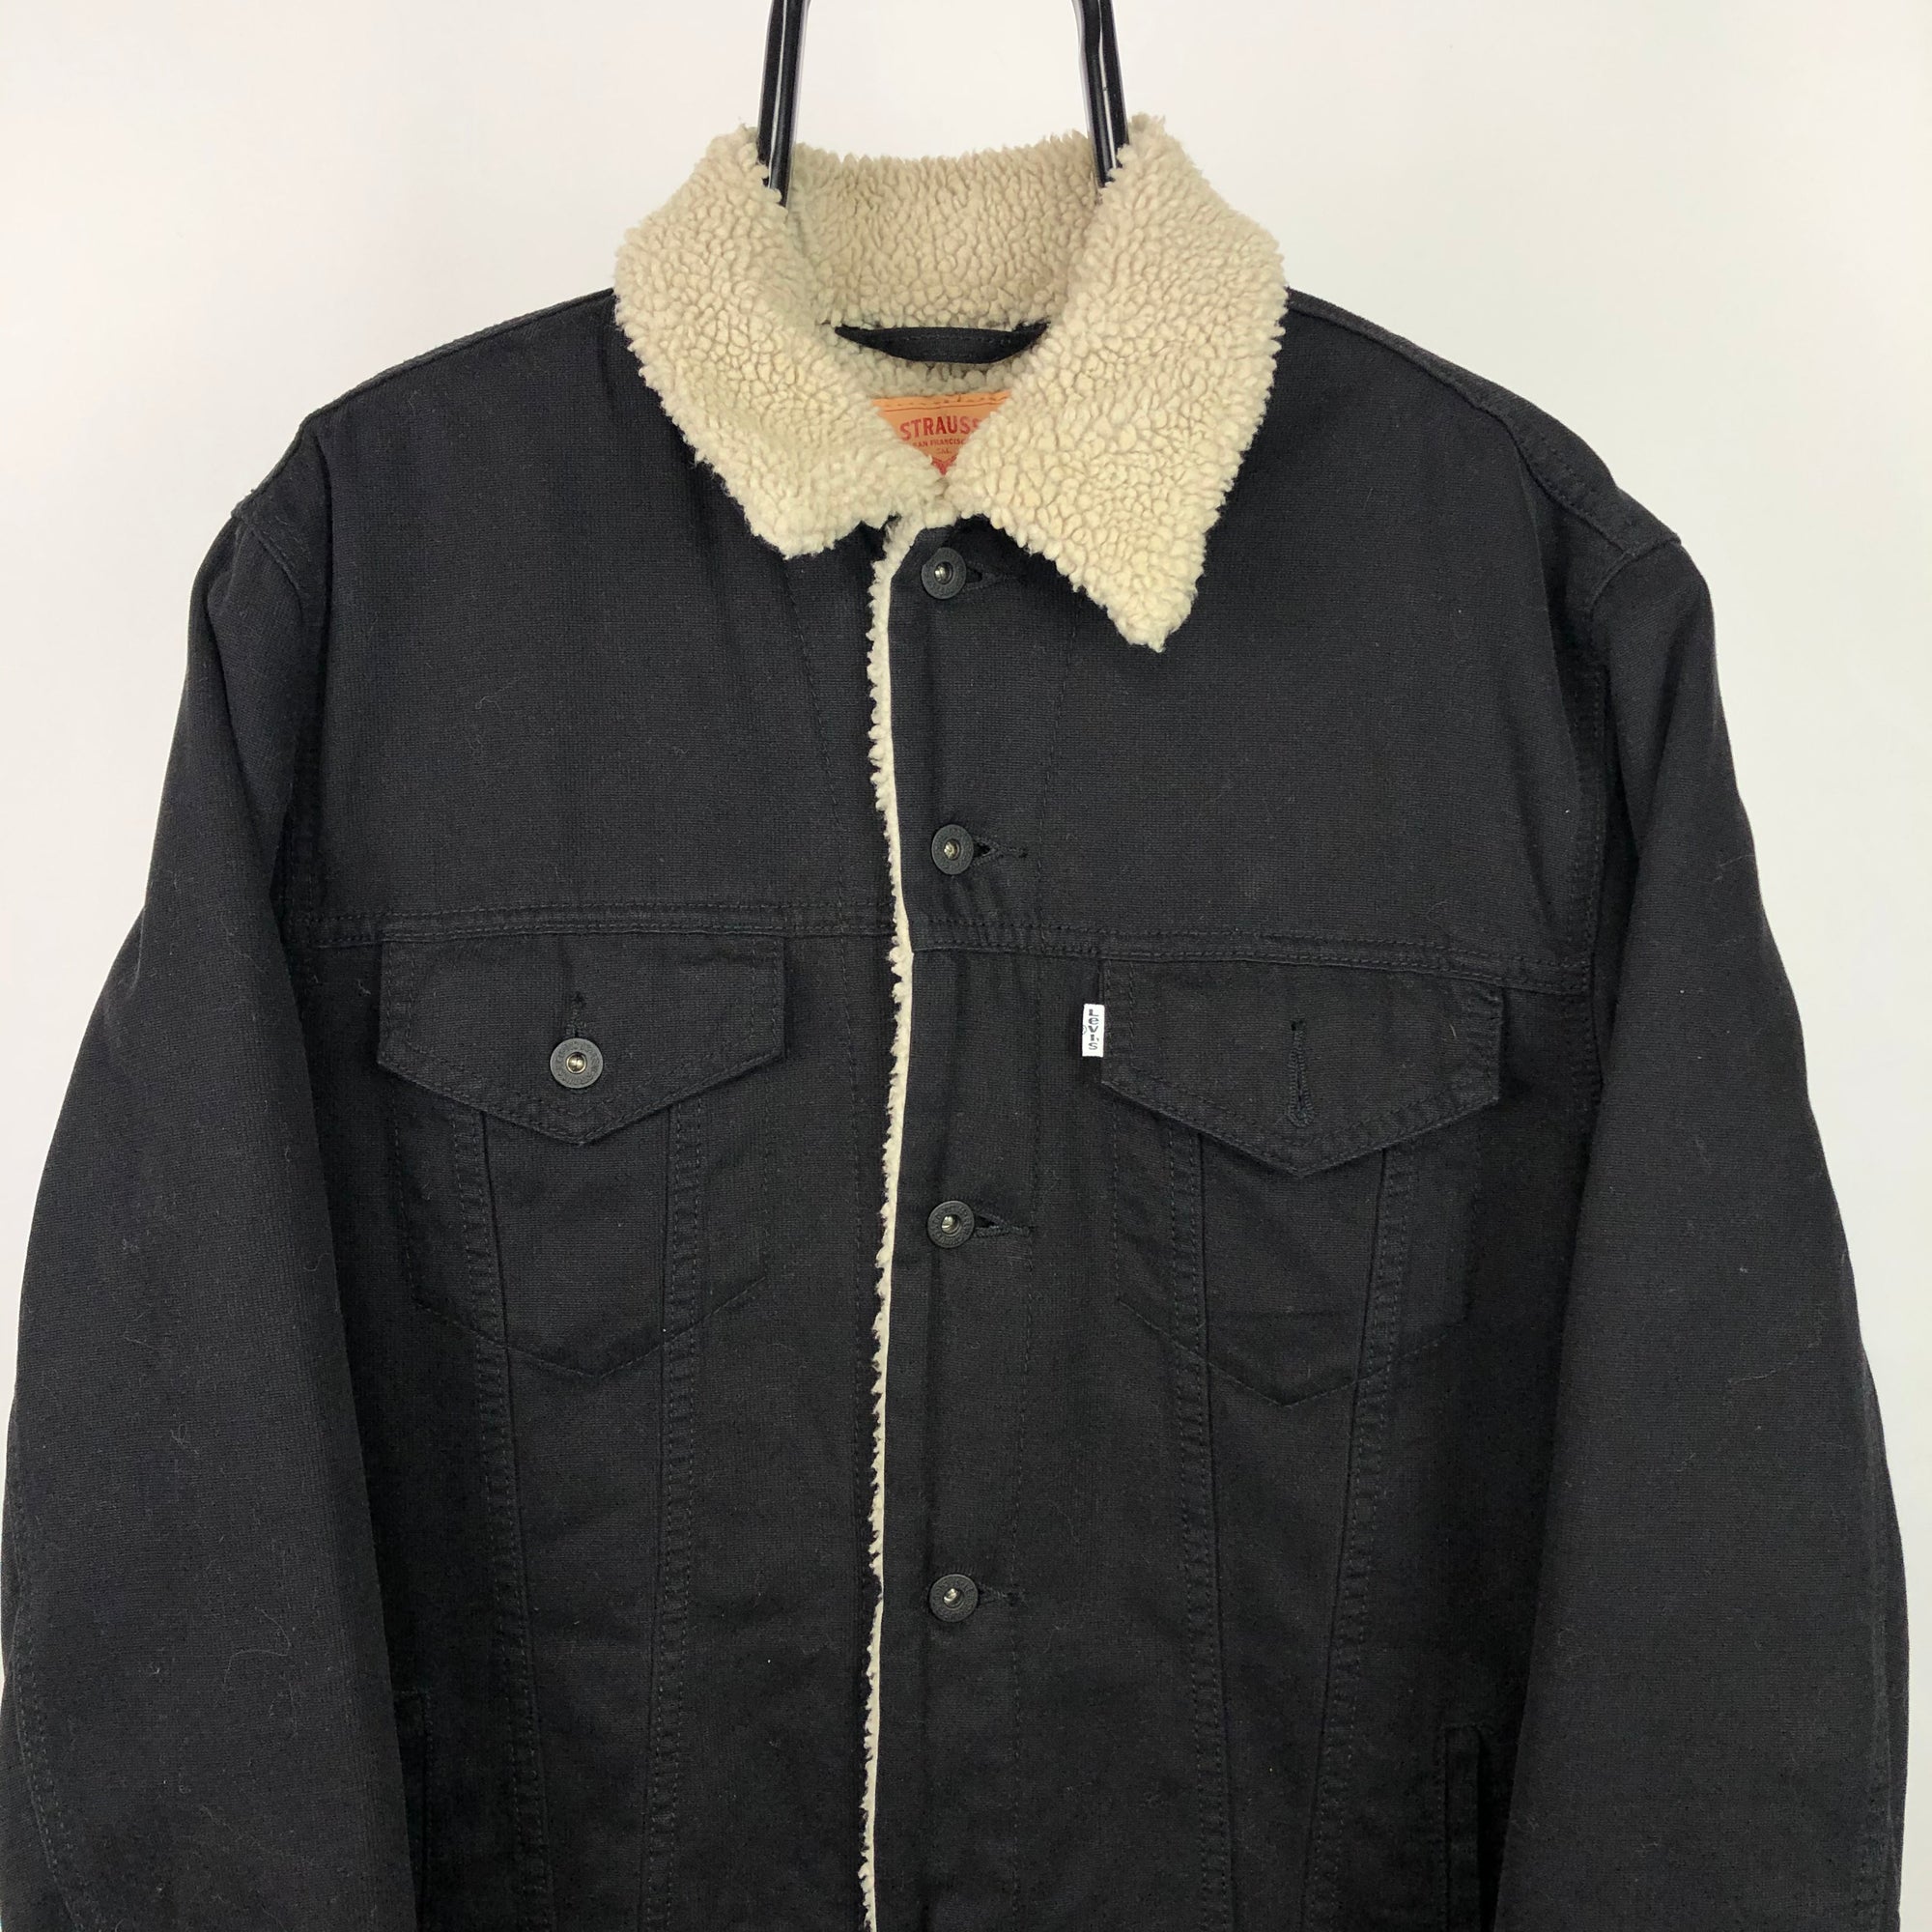 Vintage Levi's Sherpa Lined Canvas Jacket in Black - Men's Medium/Women's Large